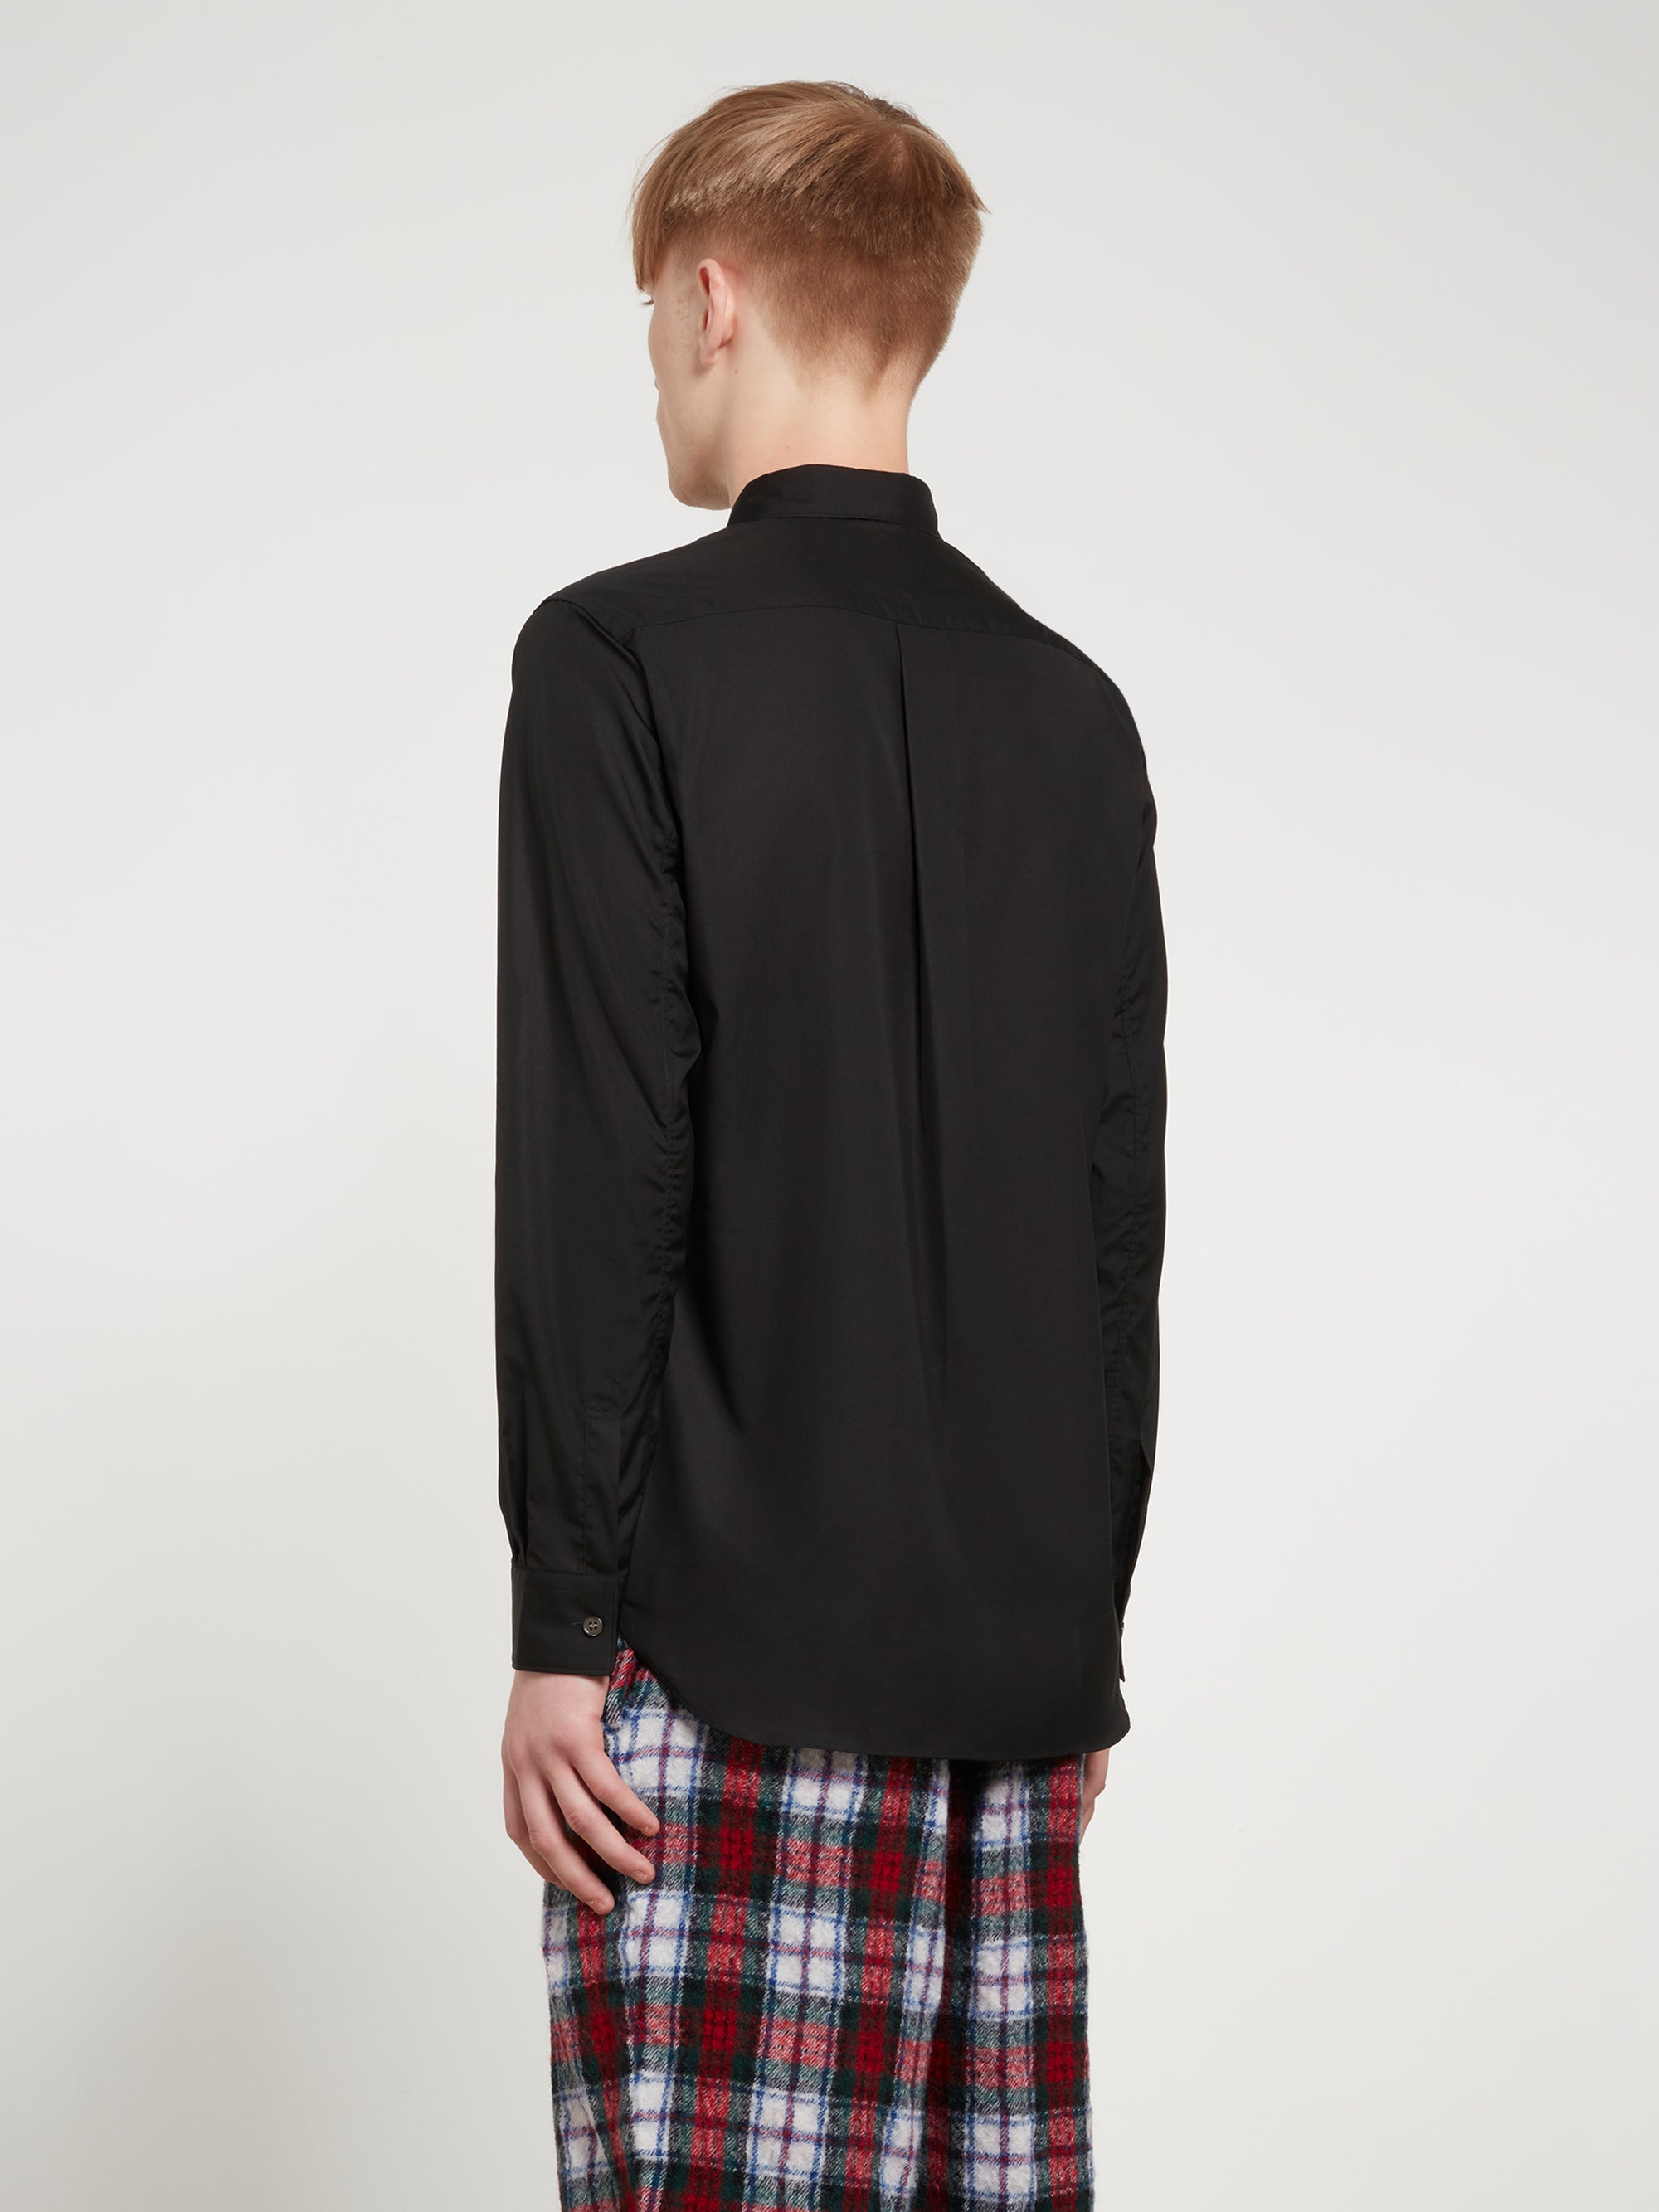 CDG Shirt Forever - Slim Fit Button-Down Cotton Shirt - (Black) view 4